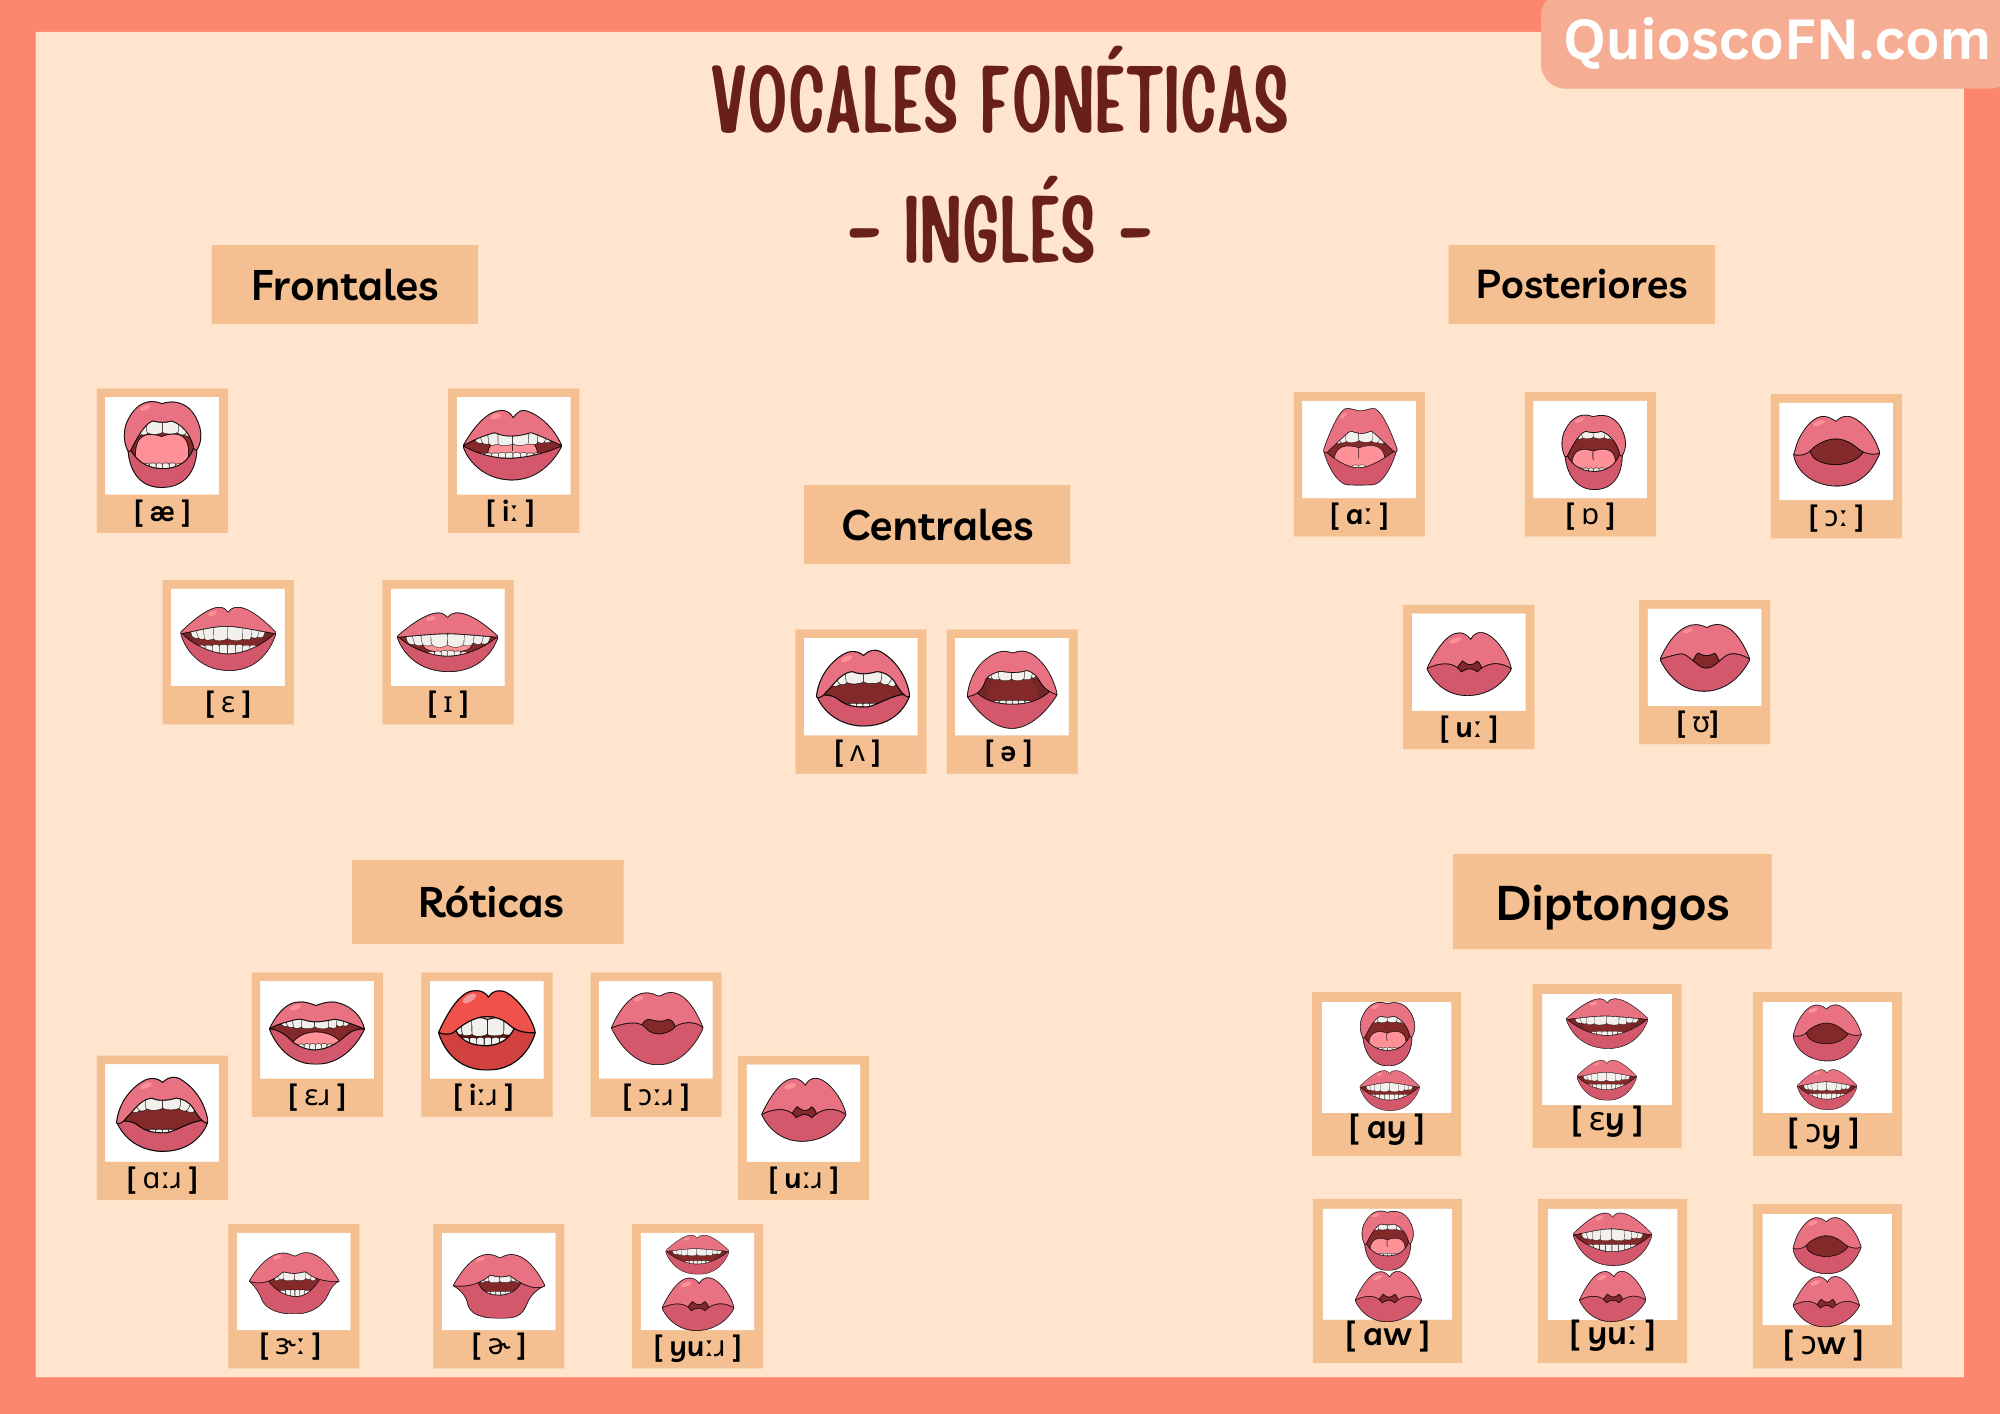 Vocales Fonéticas del Idioma Inglés